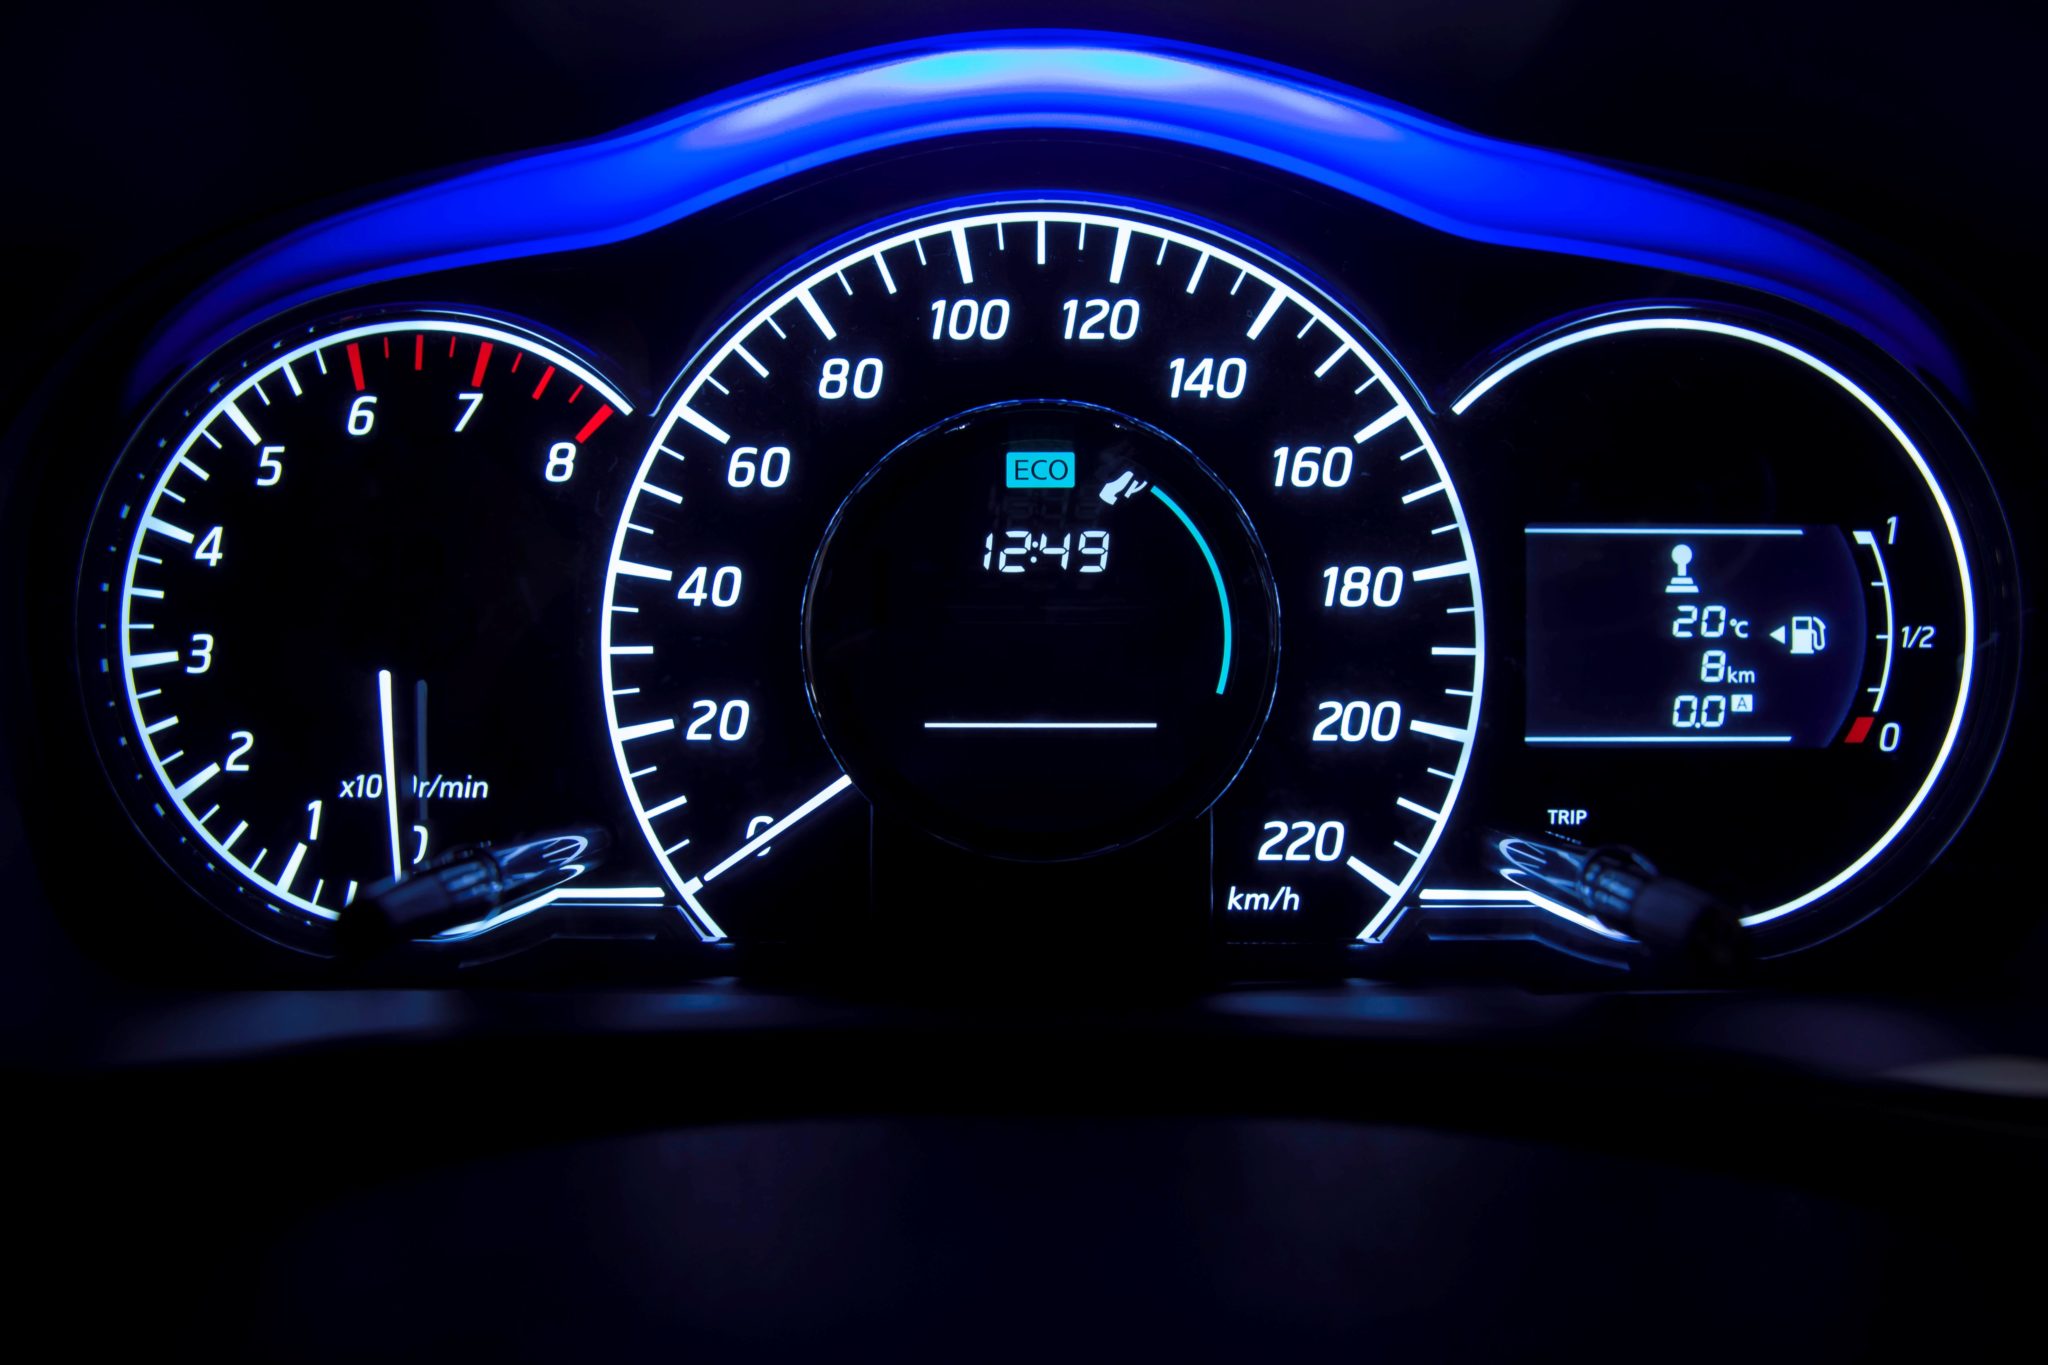 Honda inside Speedometer